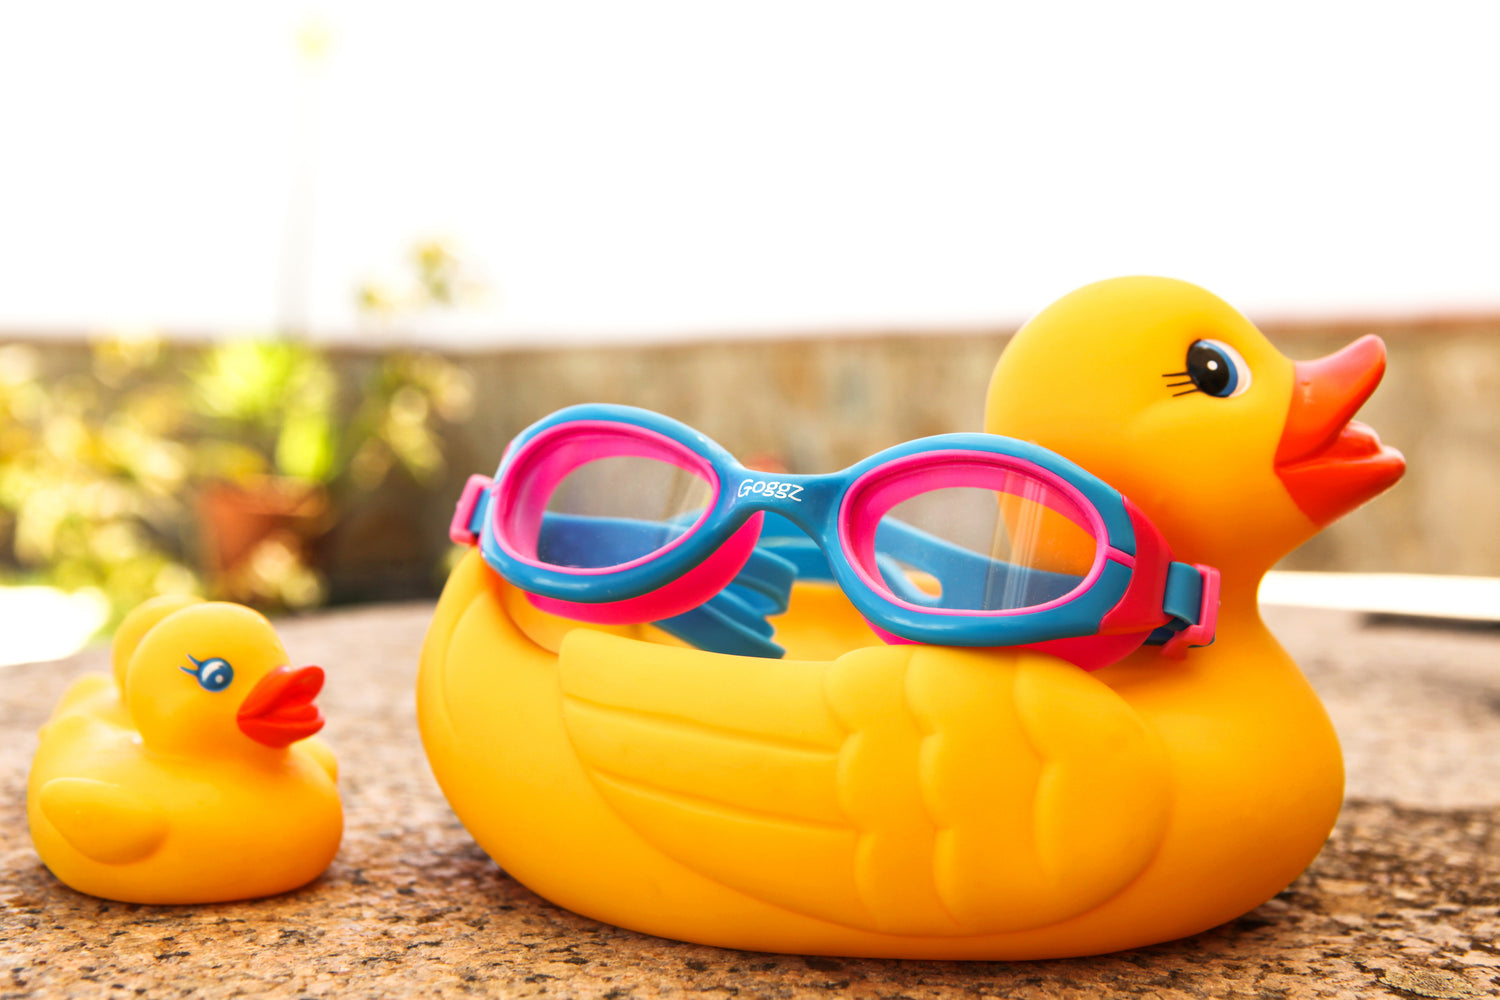 Rubber Ducks with Vazquez Pink Goggz Kids Swimming Goggles - Quirky and Fun Bath Time Accessories